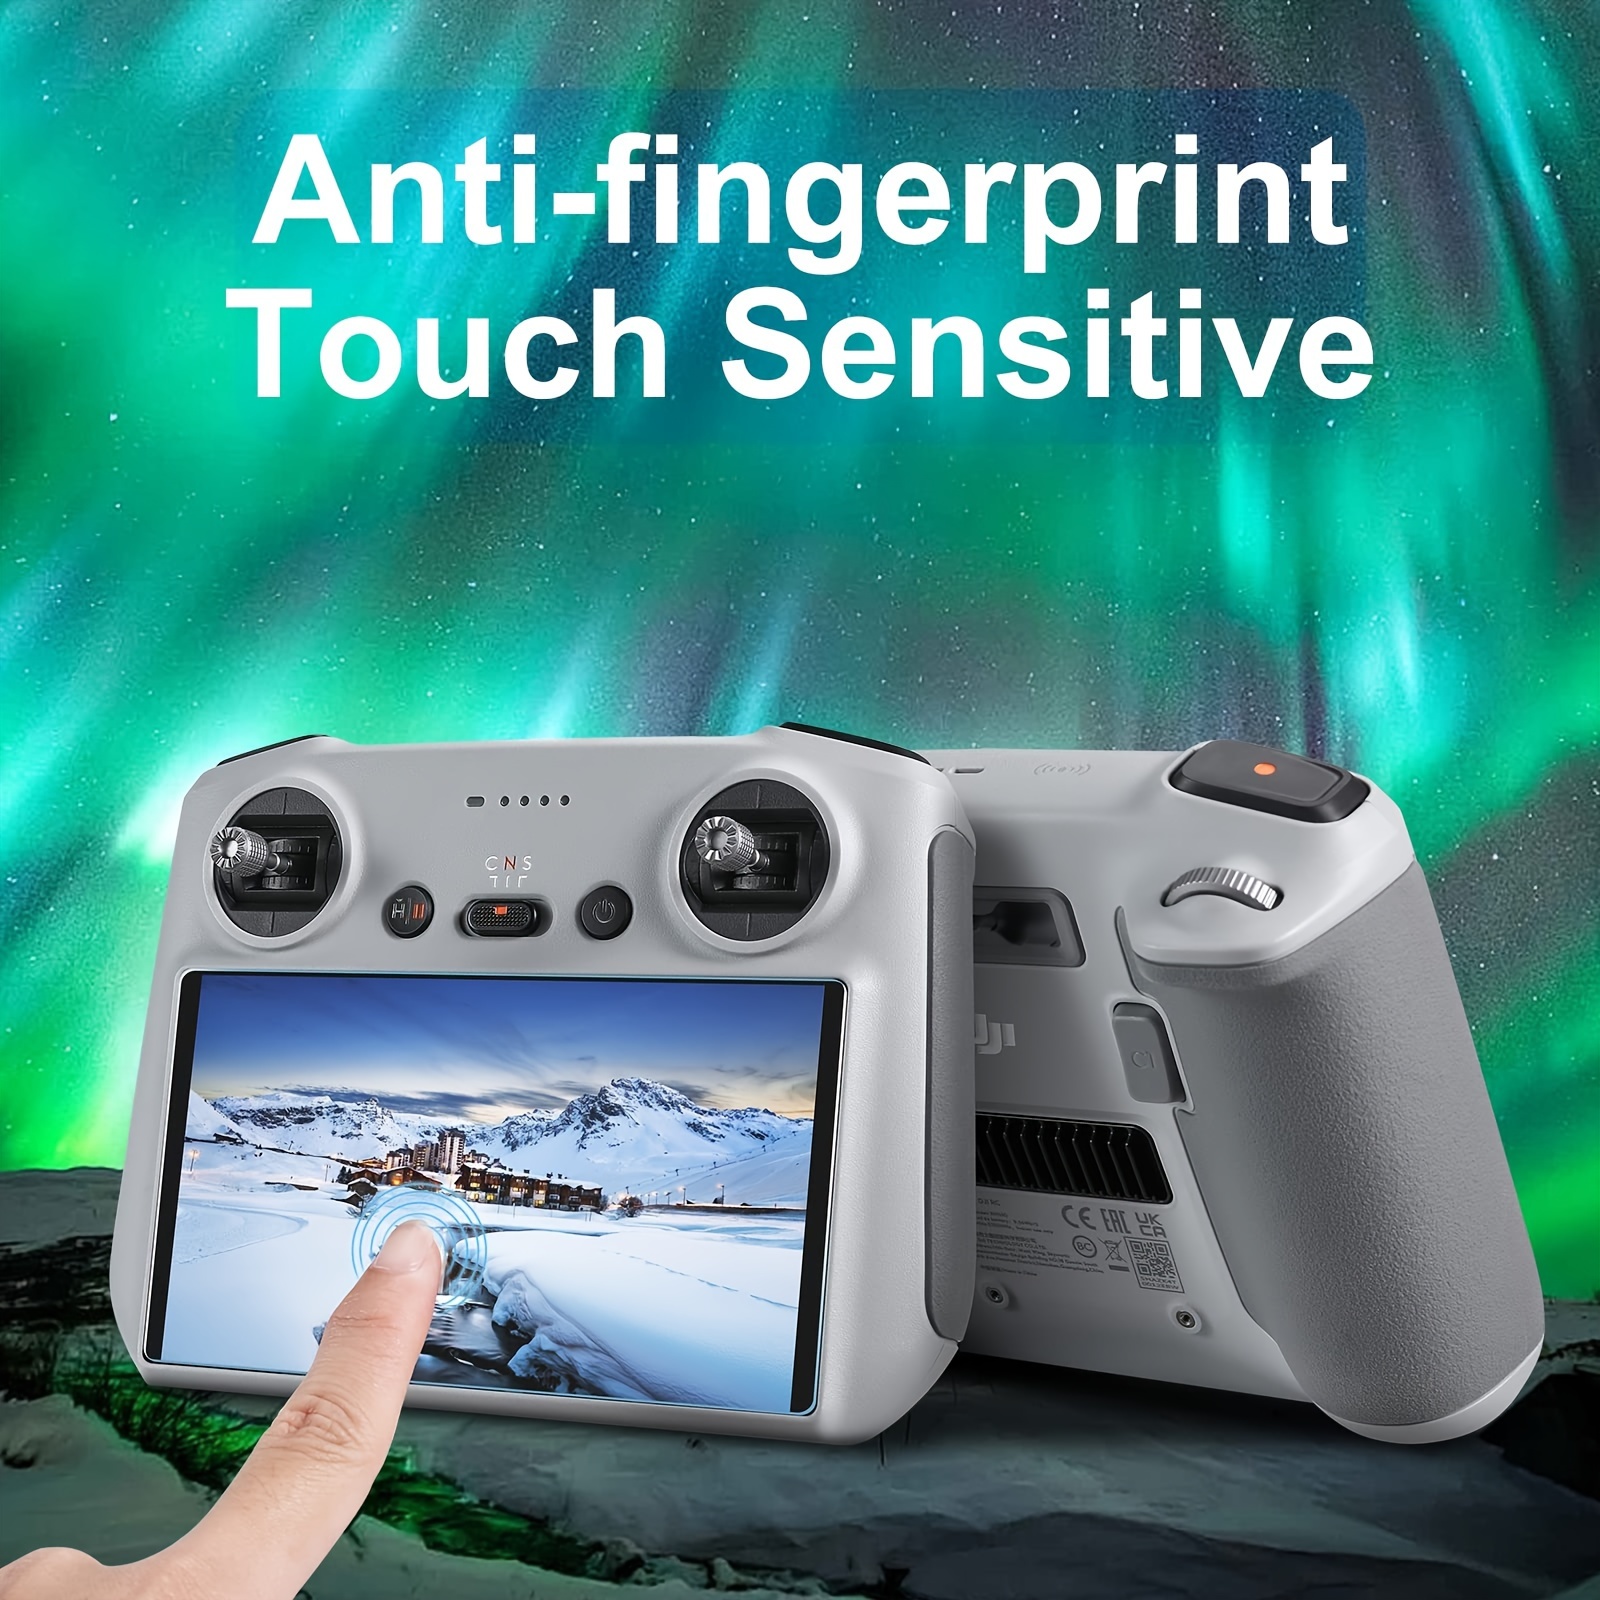  DJI Remote Controller for DJI Mini 3 Pro, Mavic 3/Cine/Classic  and Air 2S Drone : Toys & Games